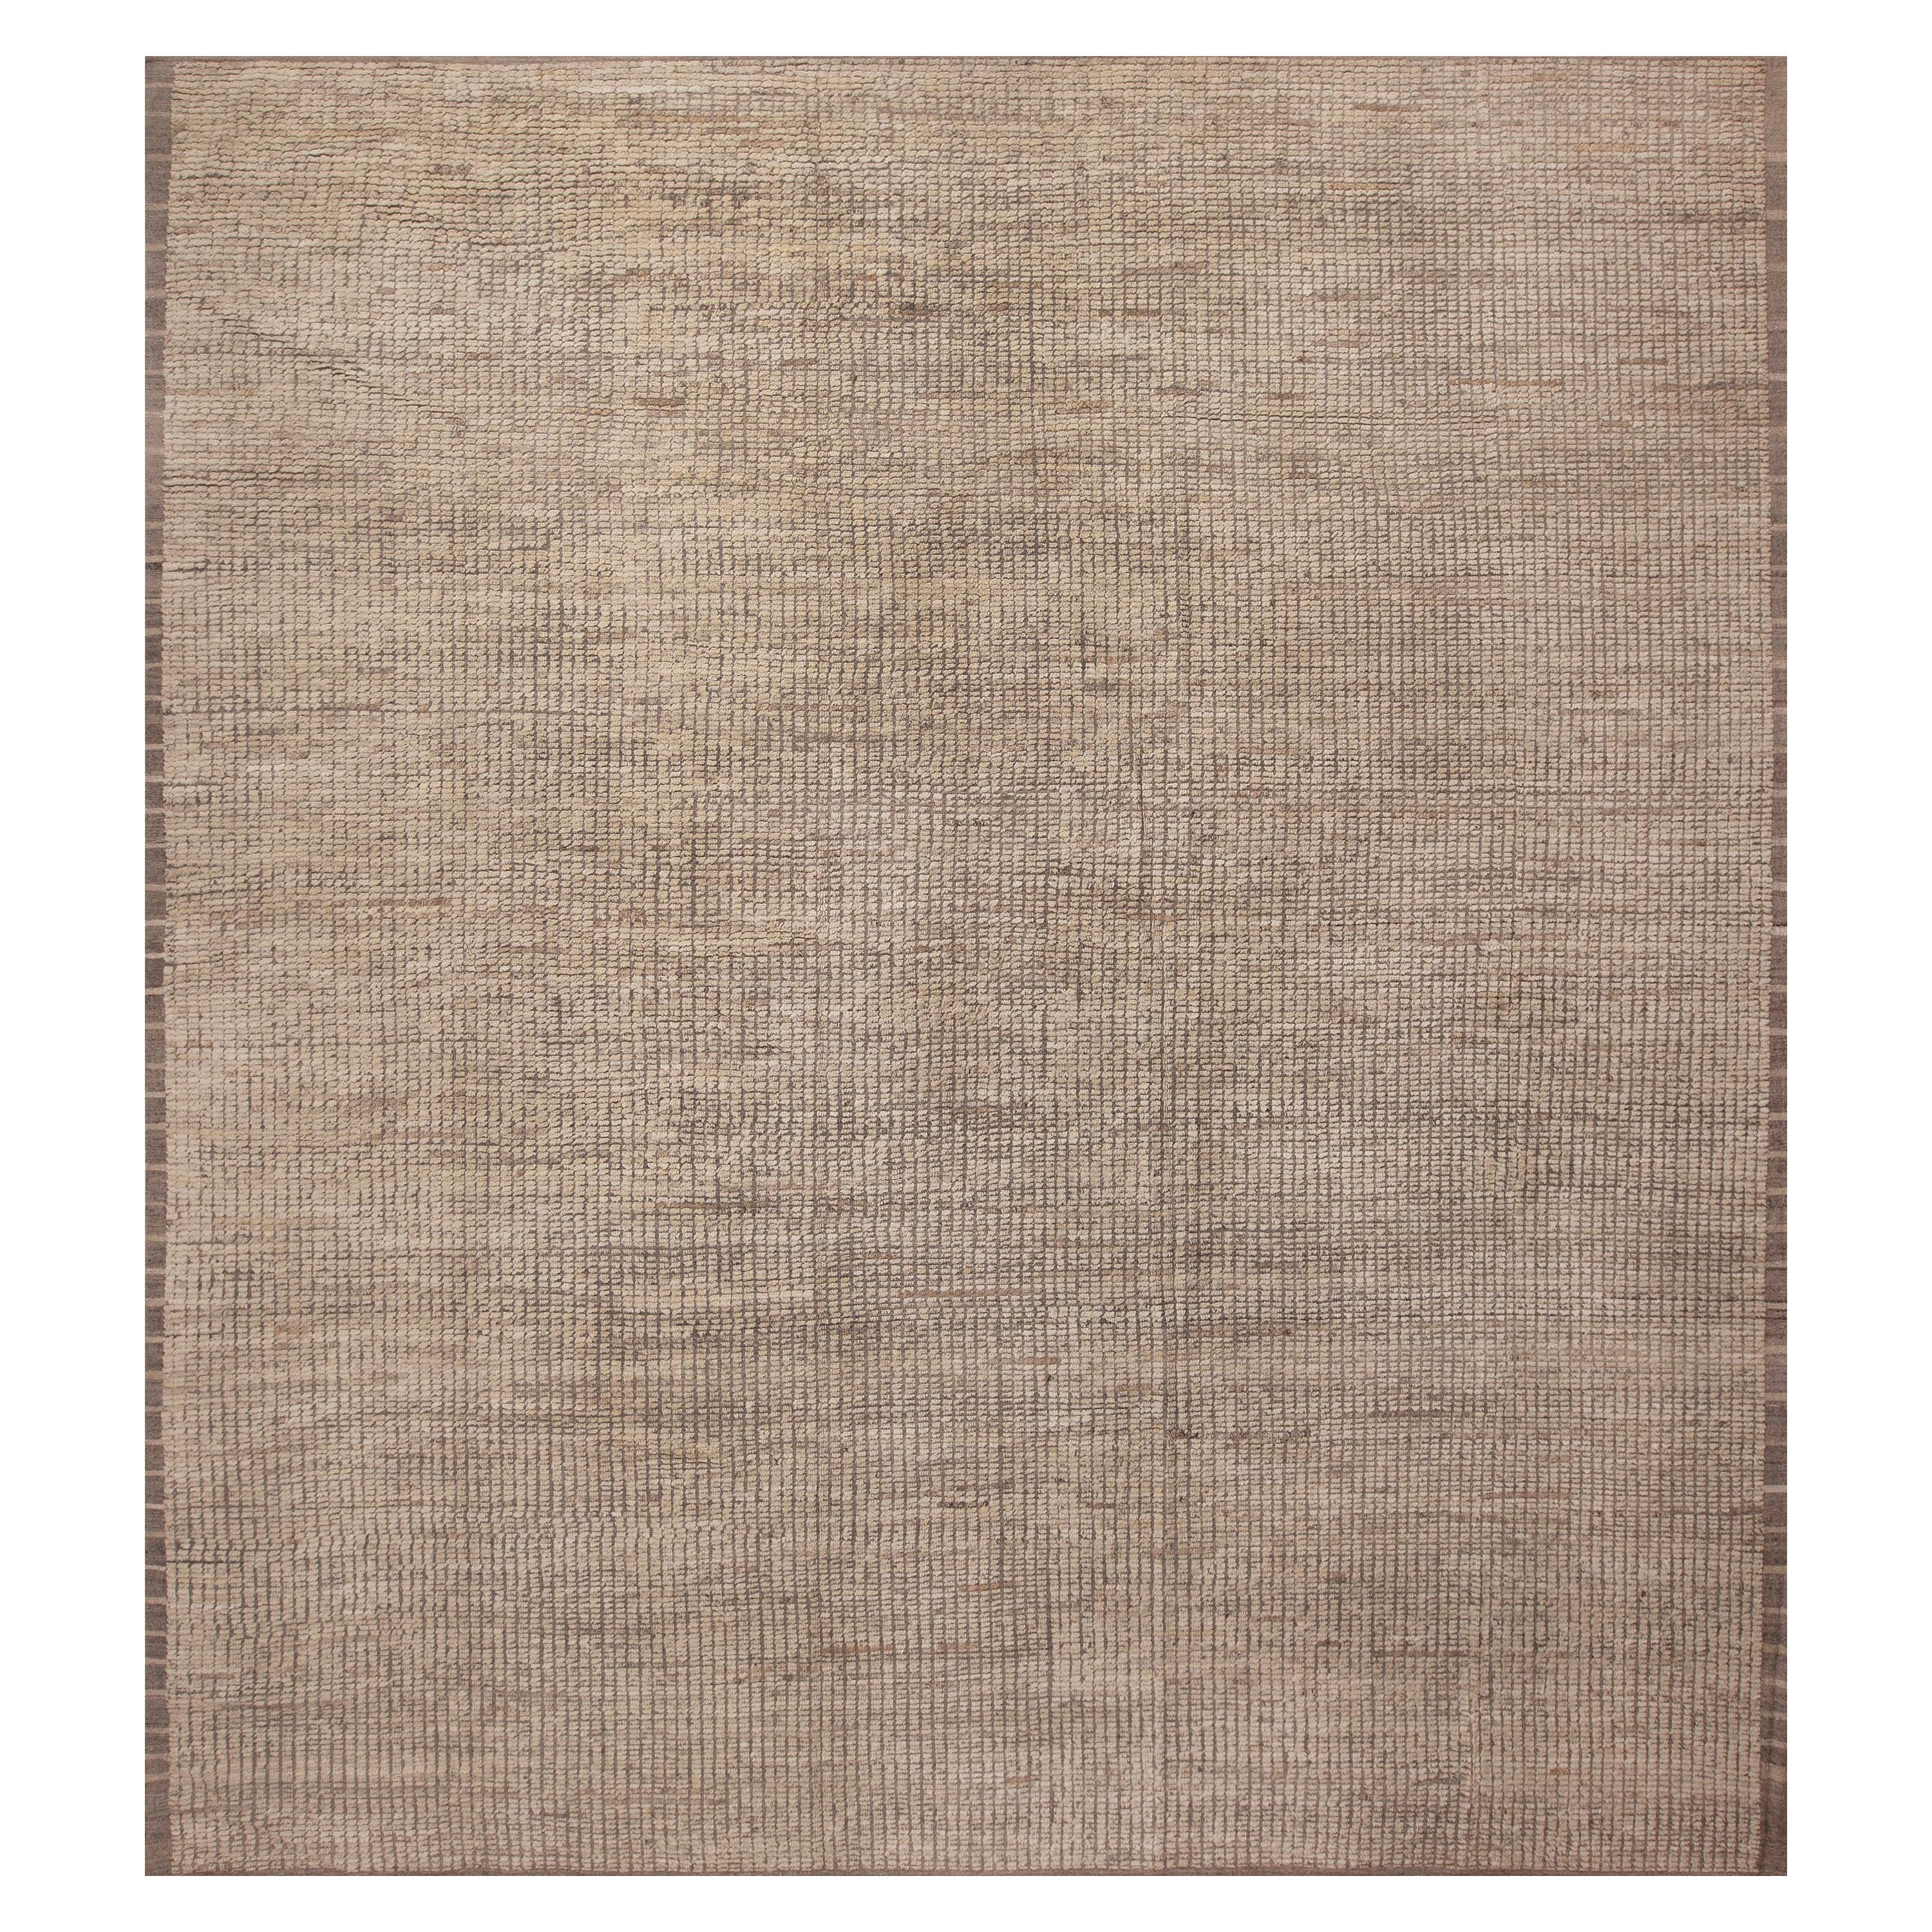 Collection Nazmiyal, taille carrée, couleur neutre, tapis moderne 13'1" x 14'4" en vente